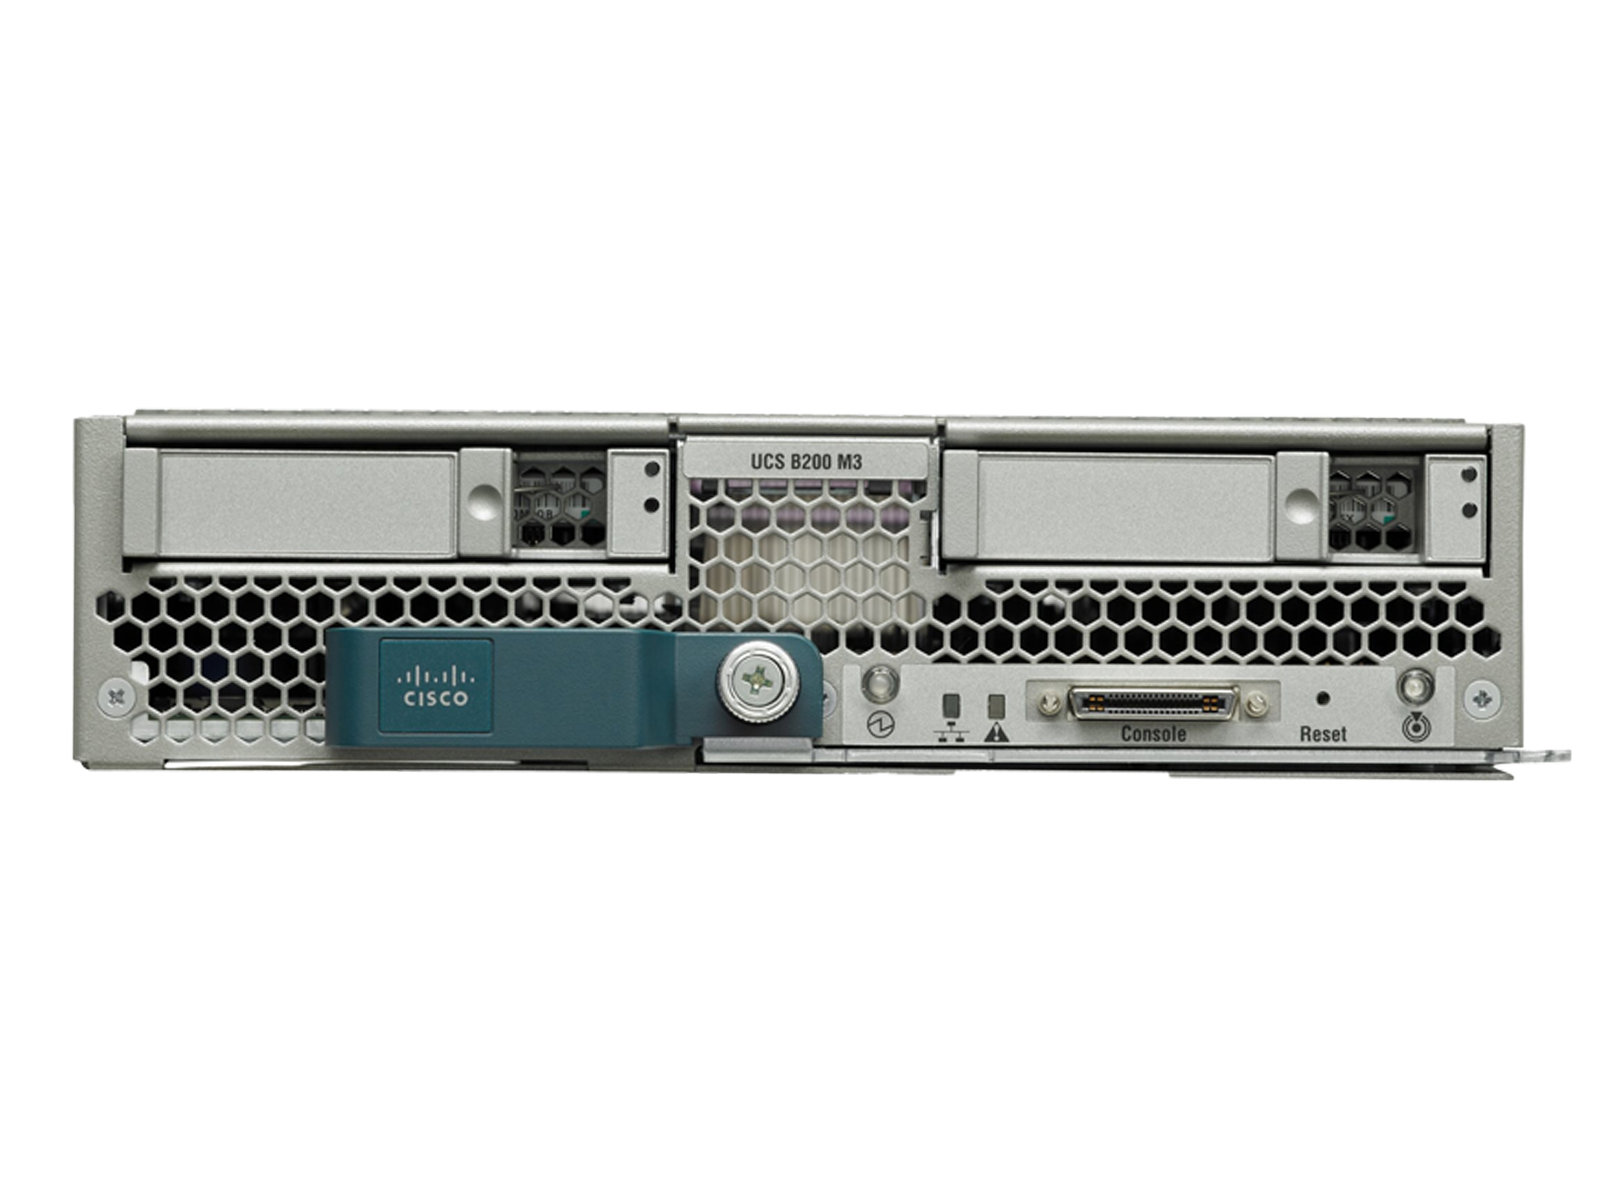 Cisco B200 M3 Two E5-2670 V2 Blade Server 2x HDD/SSD Blanks SR1A7 Up To 768GB.